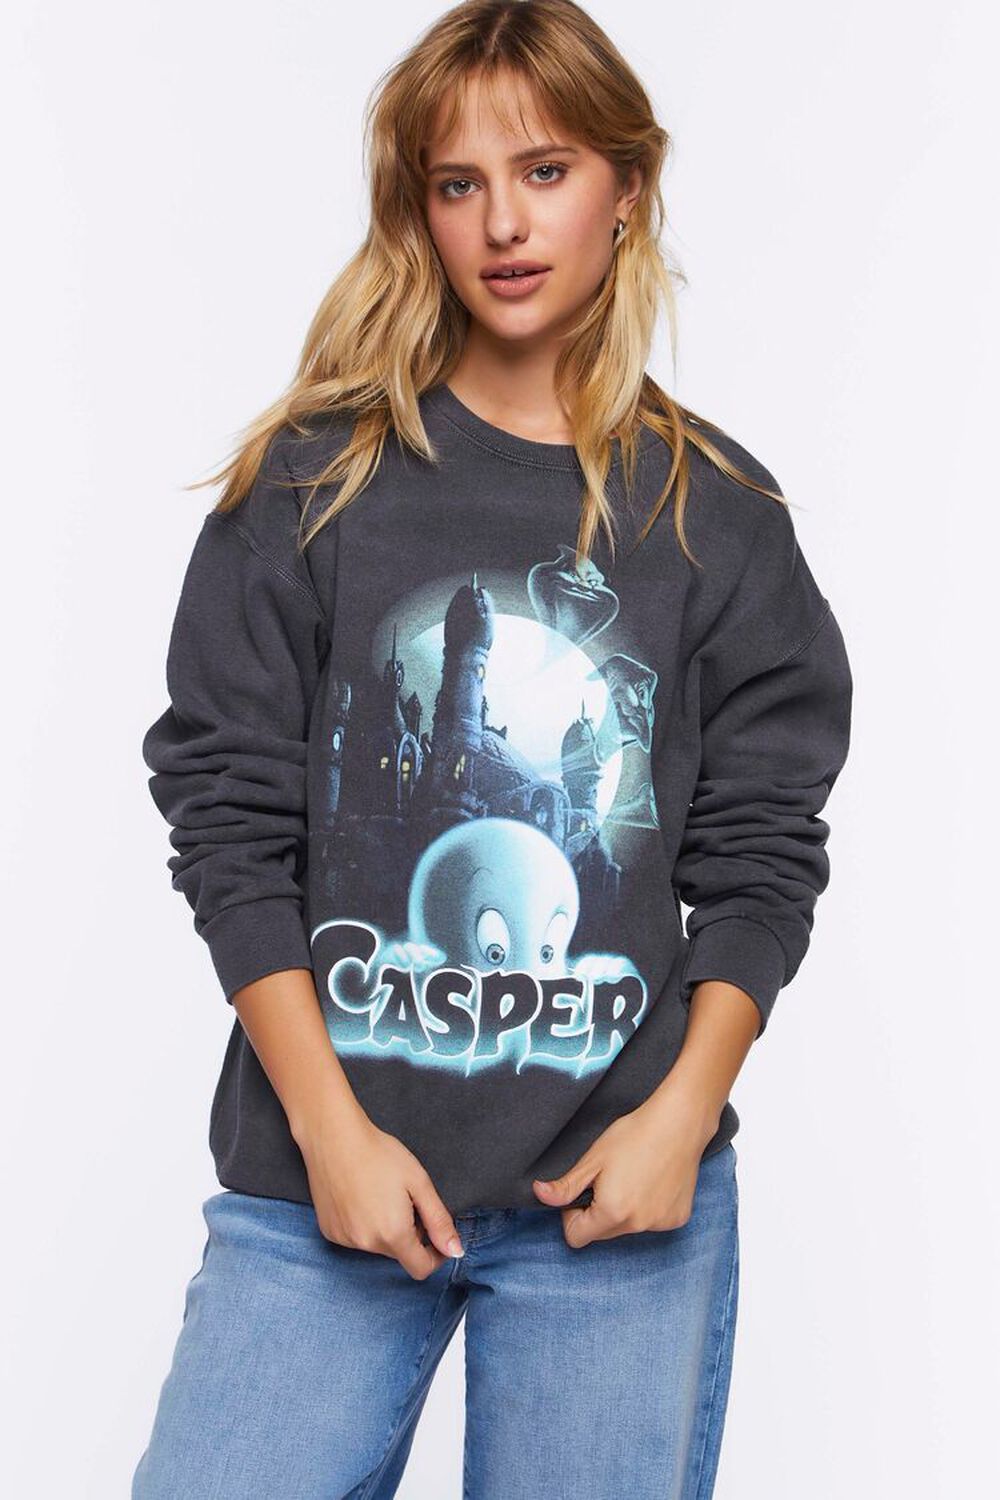 Vintage Vintage Halloween casper movie sweatshirt